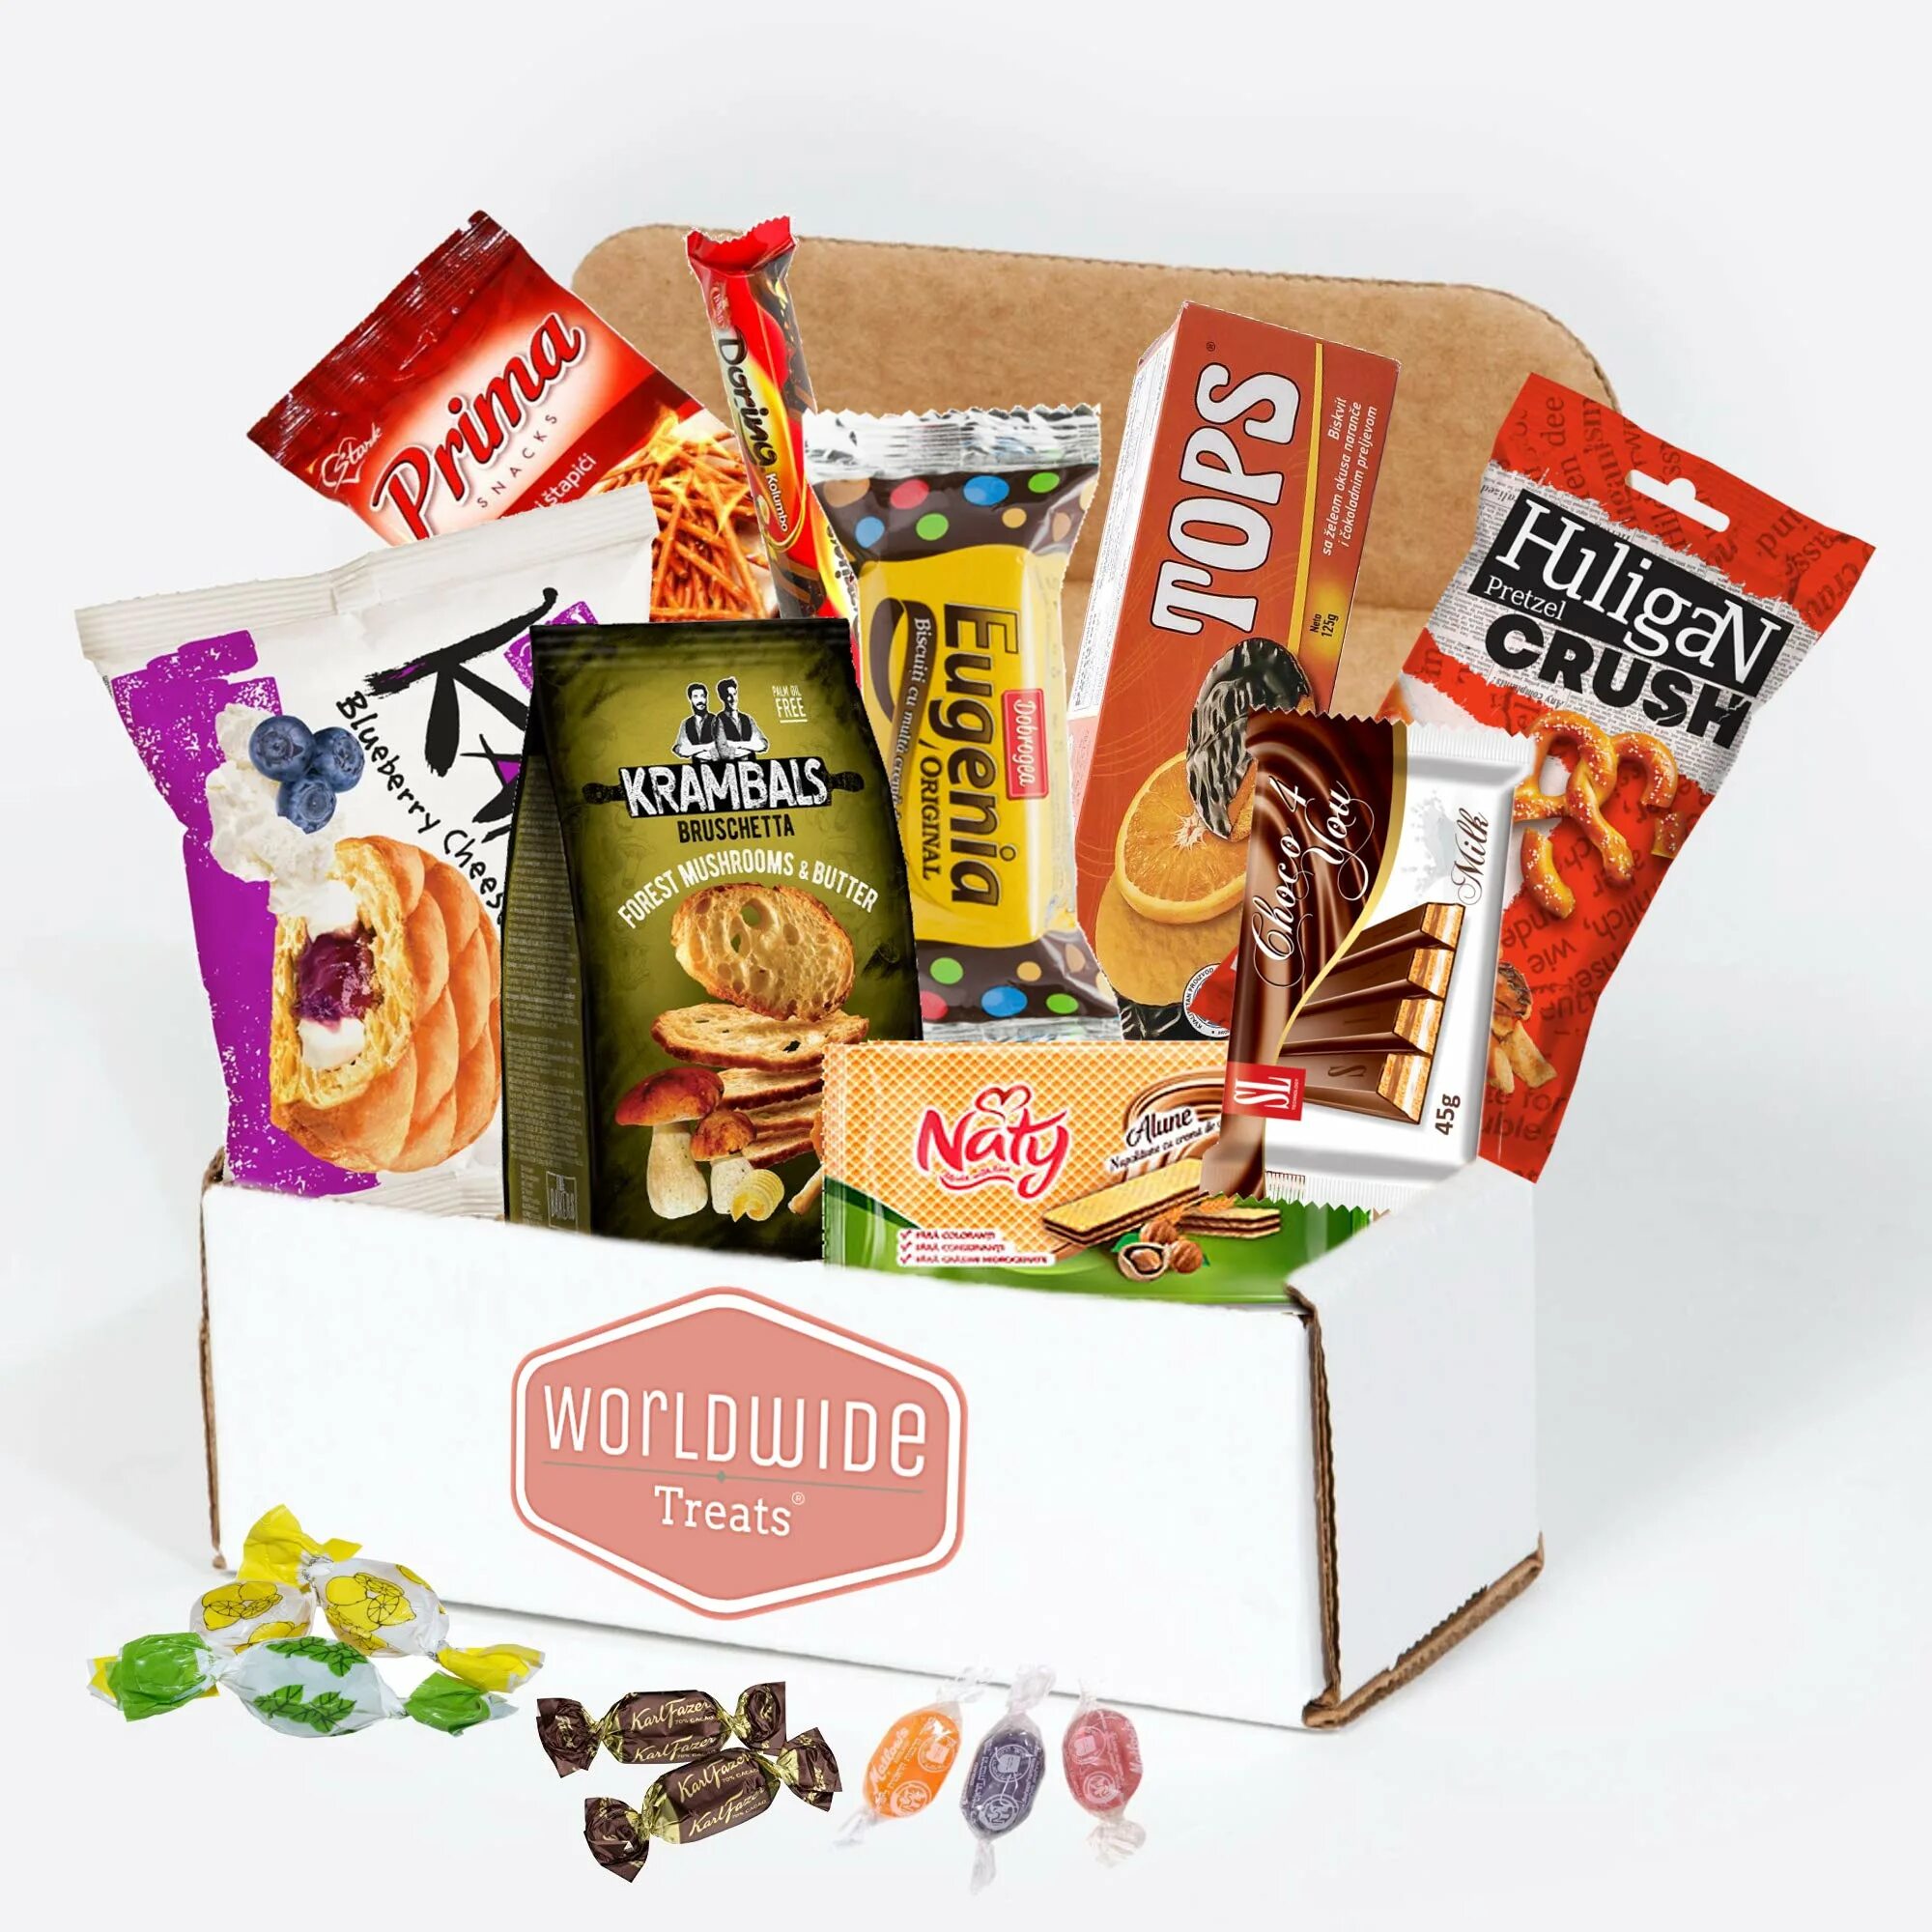 Country snack. Kix Box Европейский. Premium snacks in Europe. Inter snack. Box Return.